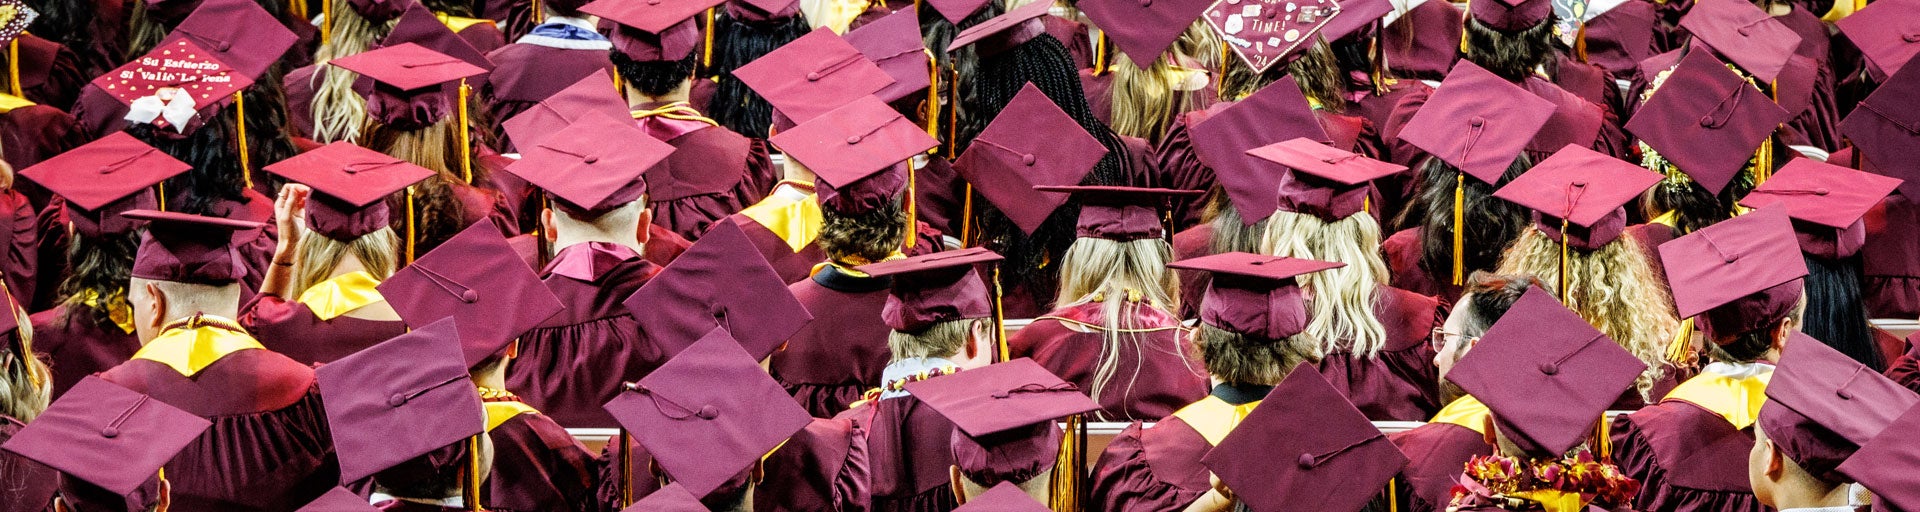 ASU graduation caps